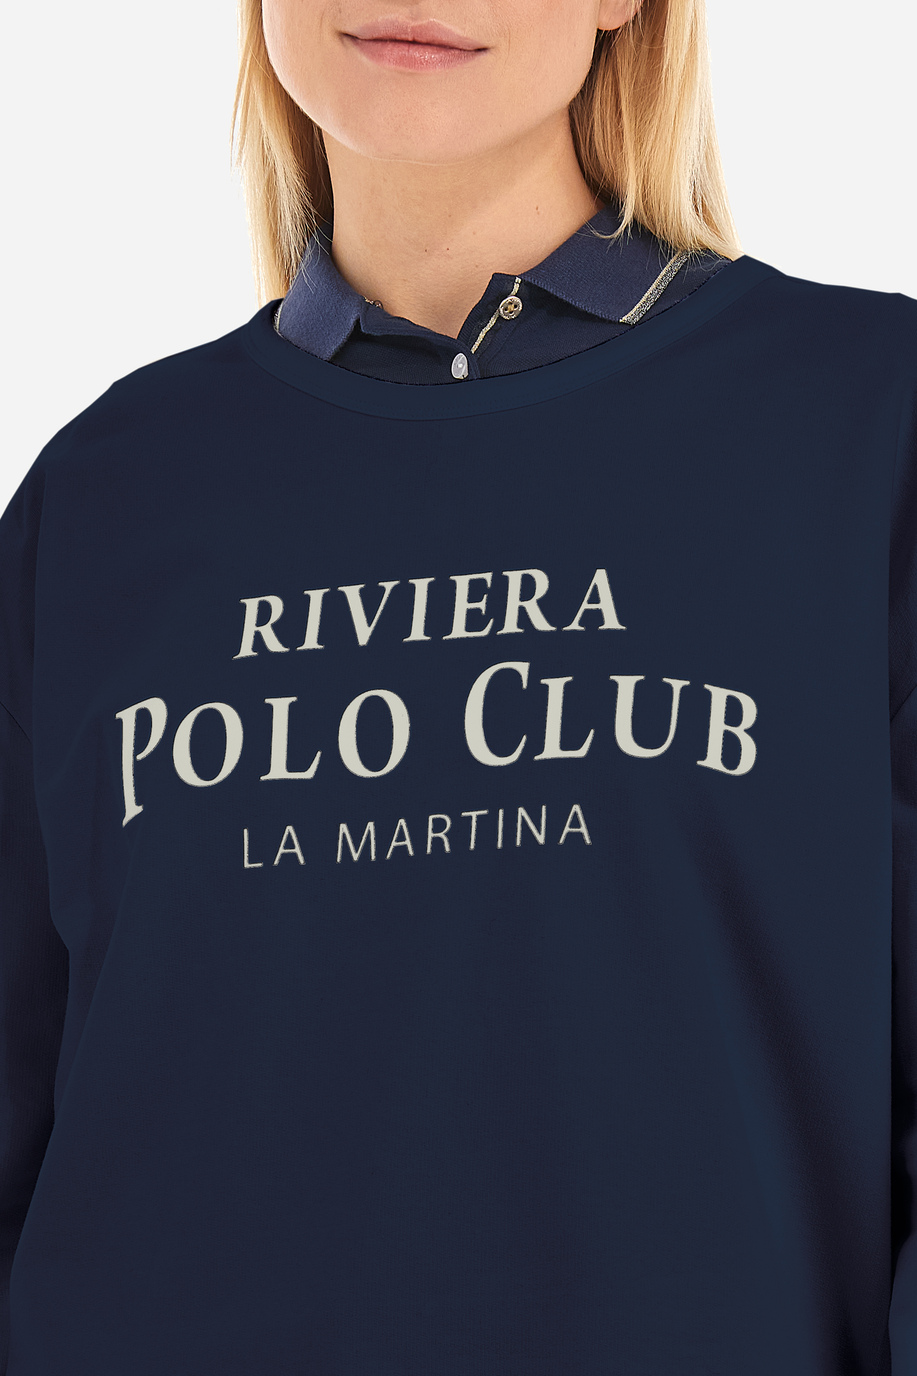 Damen-SweaT-shirt aus Baumwollmischung mit normaler Passform- Venita - Sweatshirts | La Martina - Official Online Shop